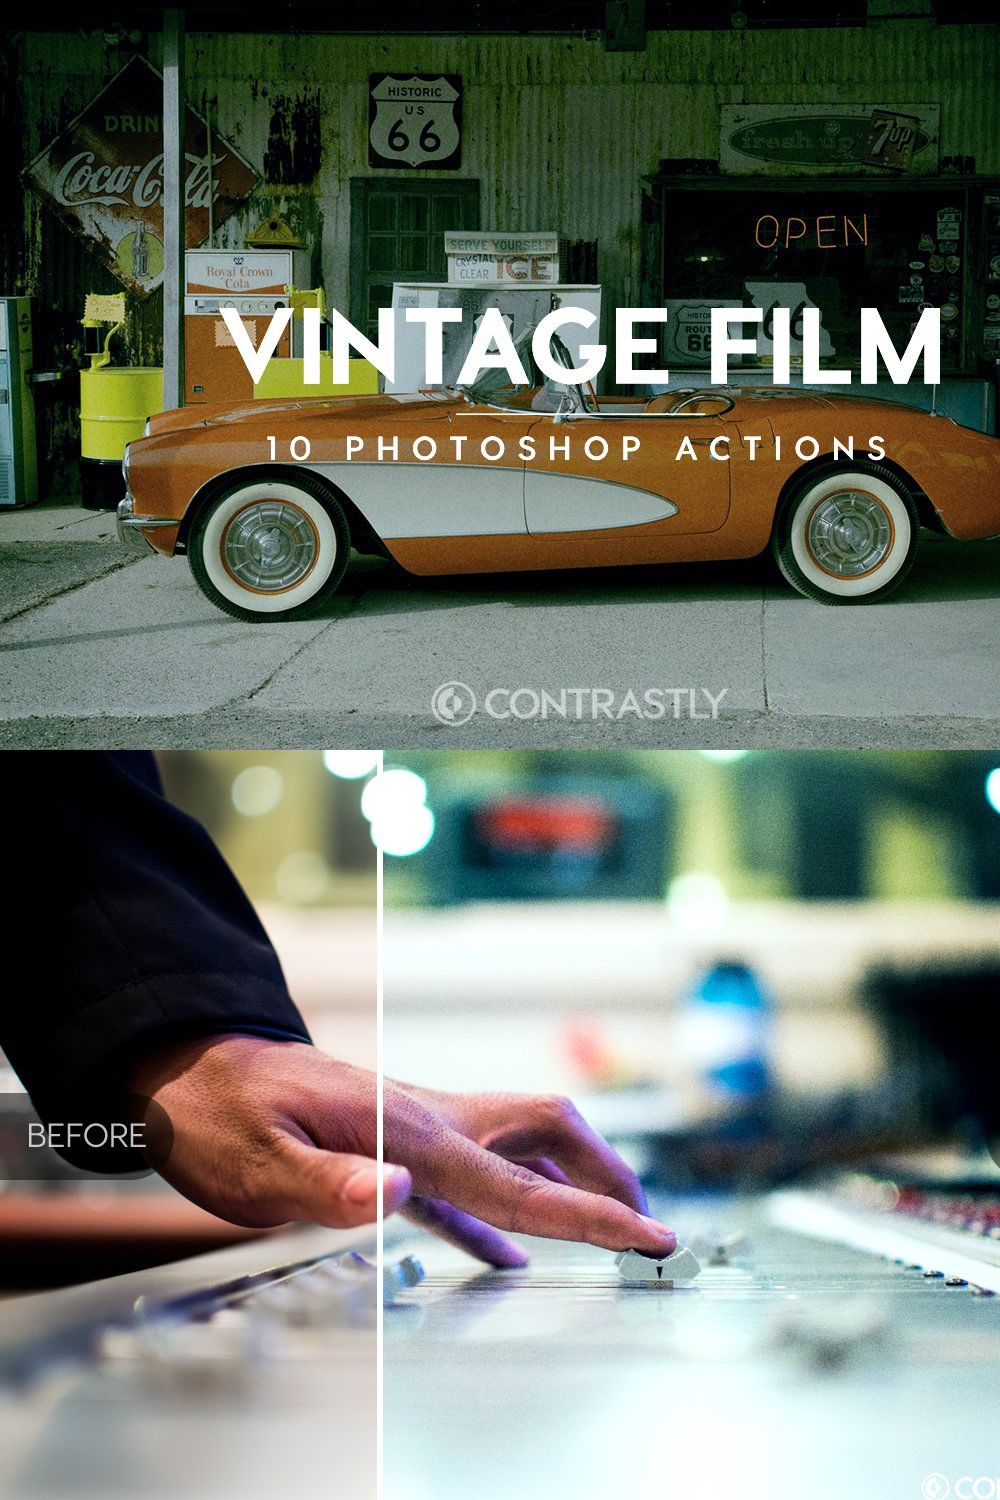 Vintage Film Photoshop Actions pinterest preview image.